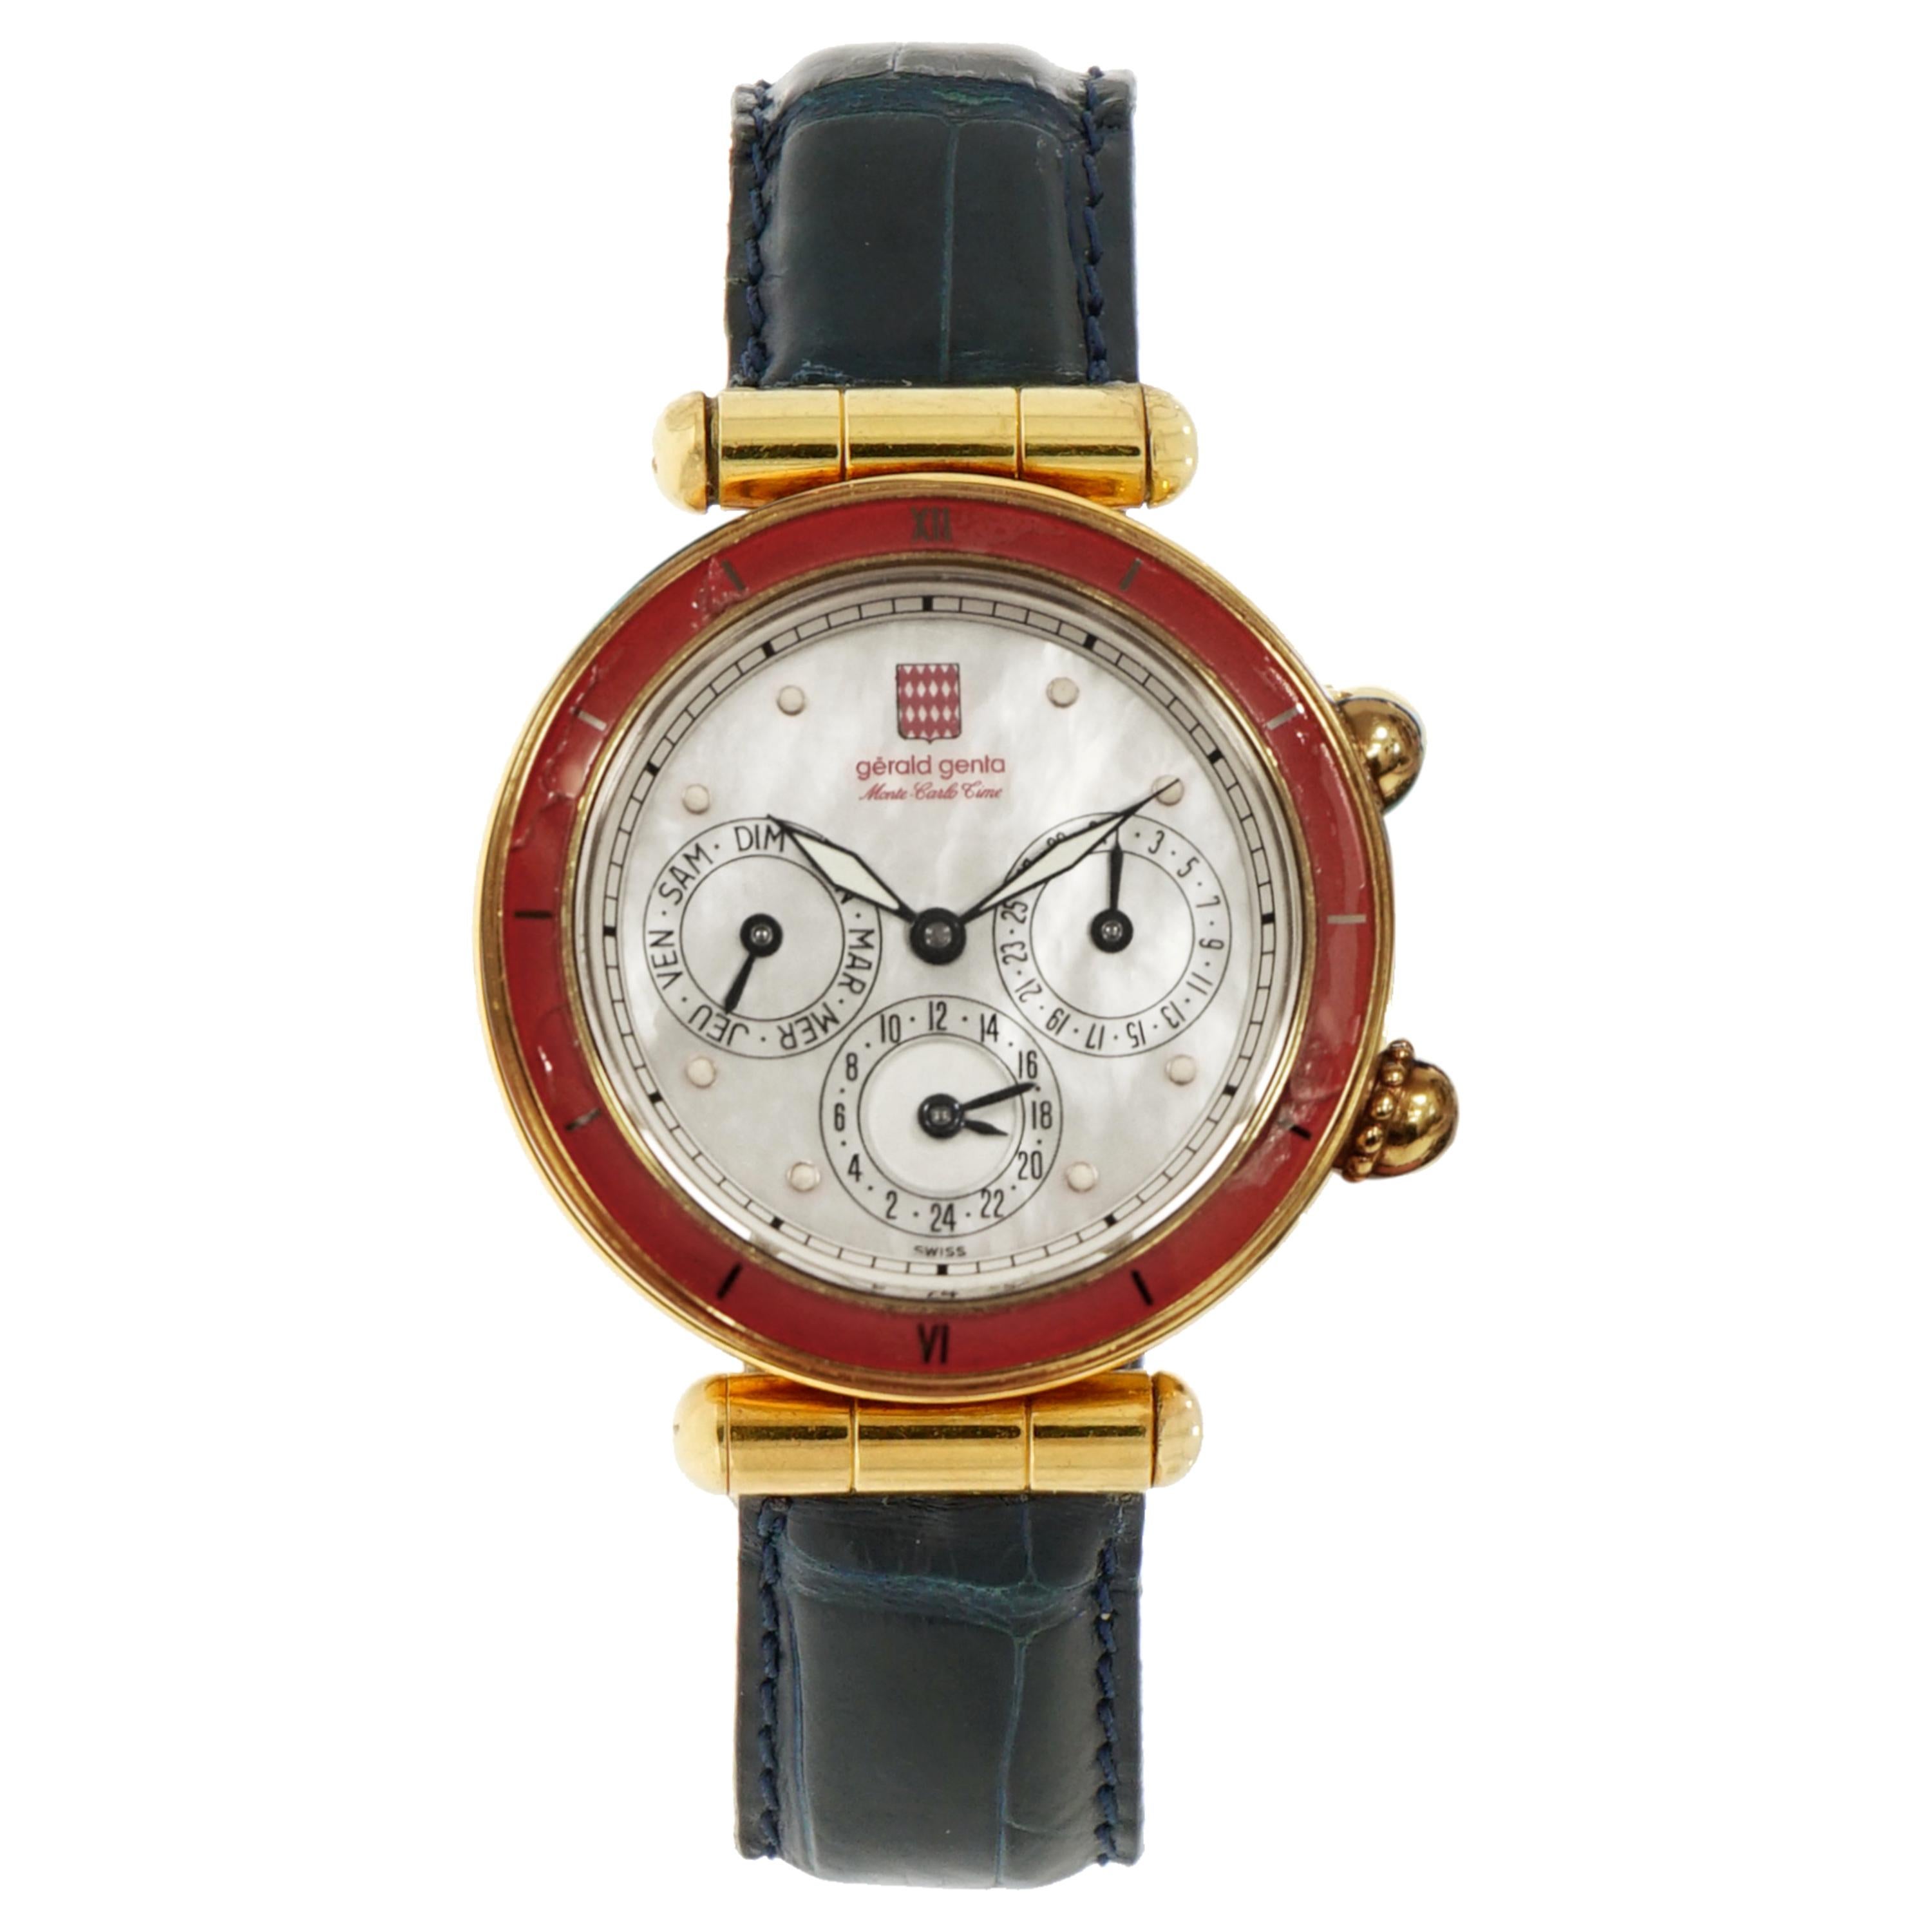 Gerald Genta "Monte Carlo Time" Wristwatch